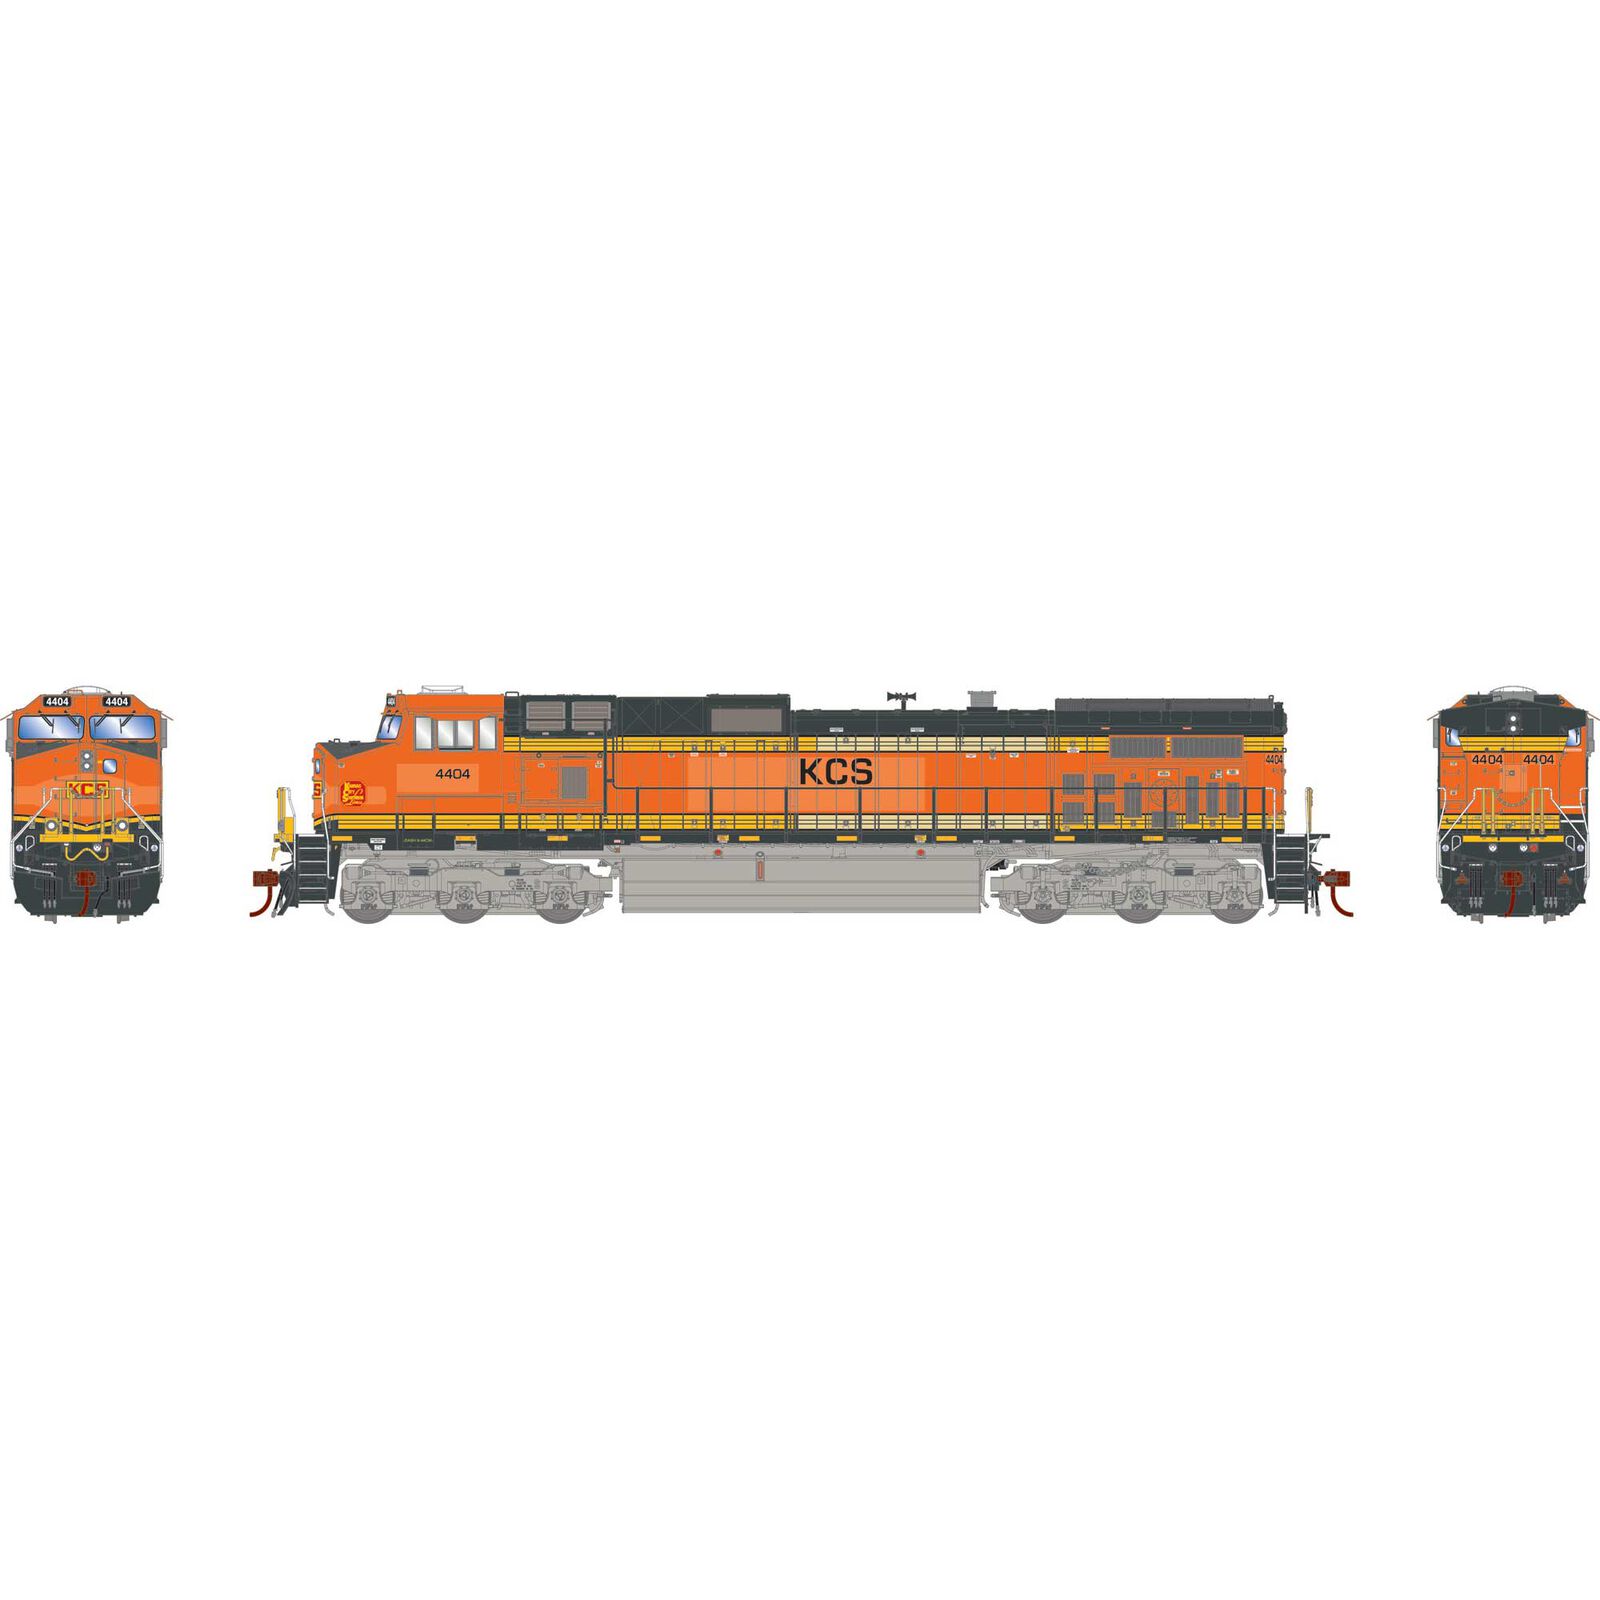 HO Dash 9-44CW Locomotive with DCC & Sound, KCS #4404